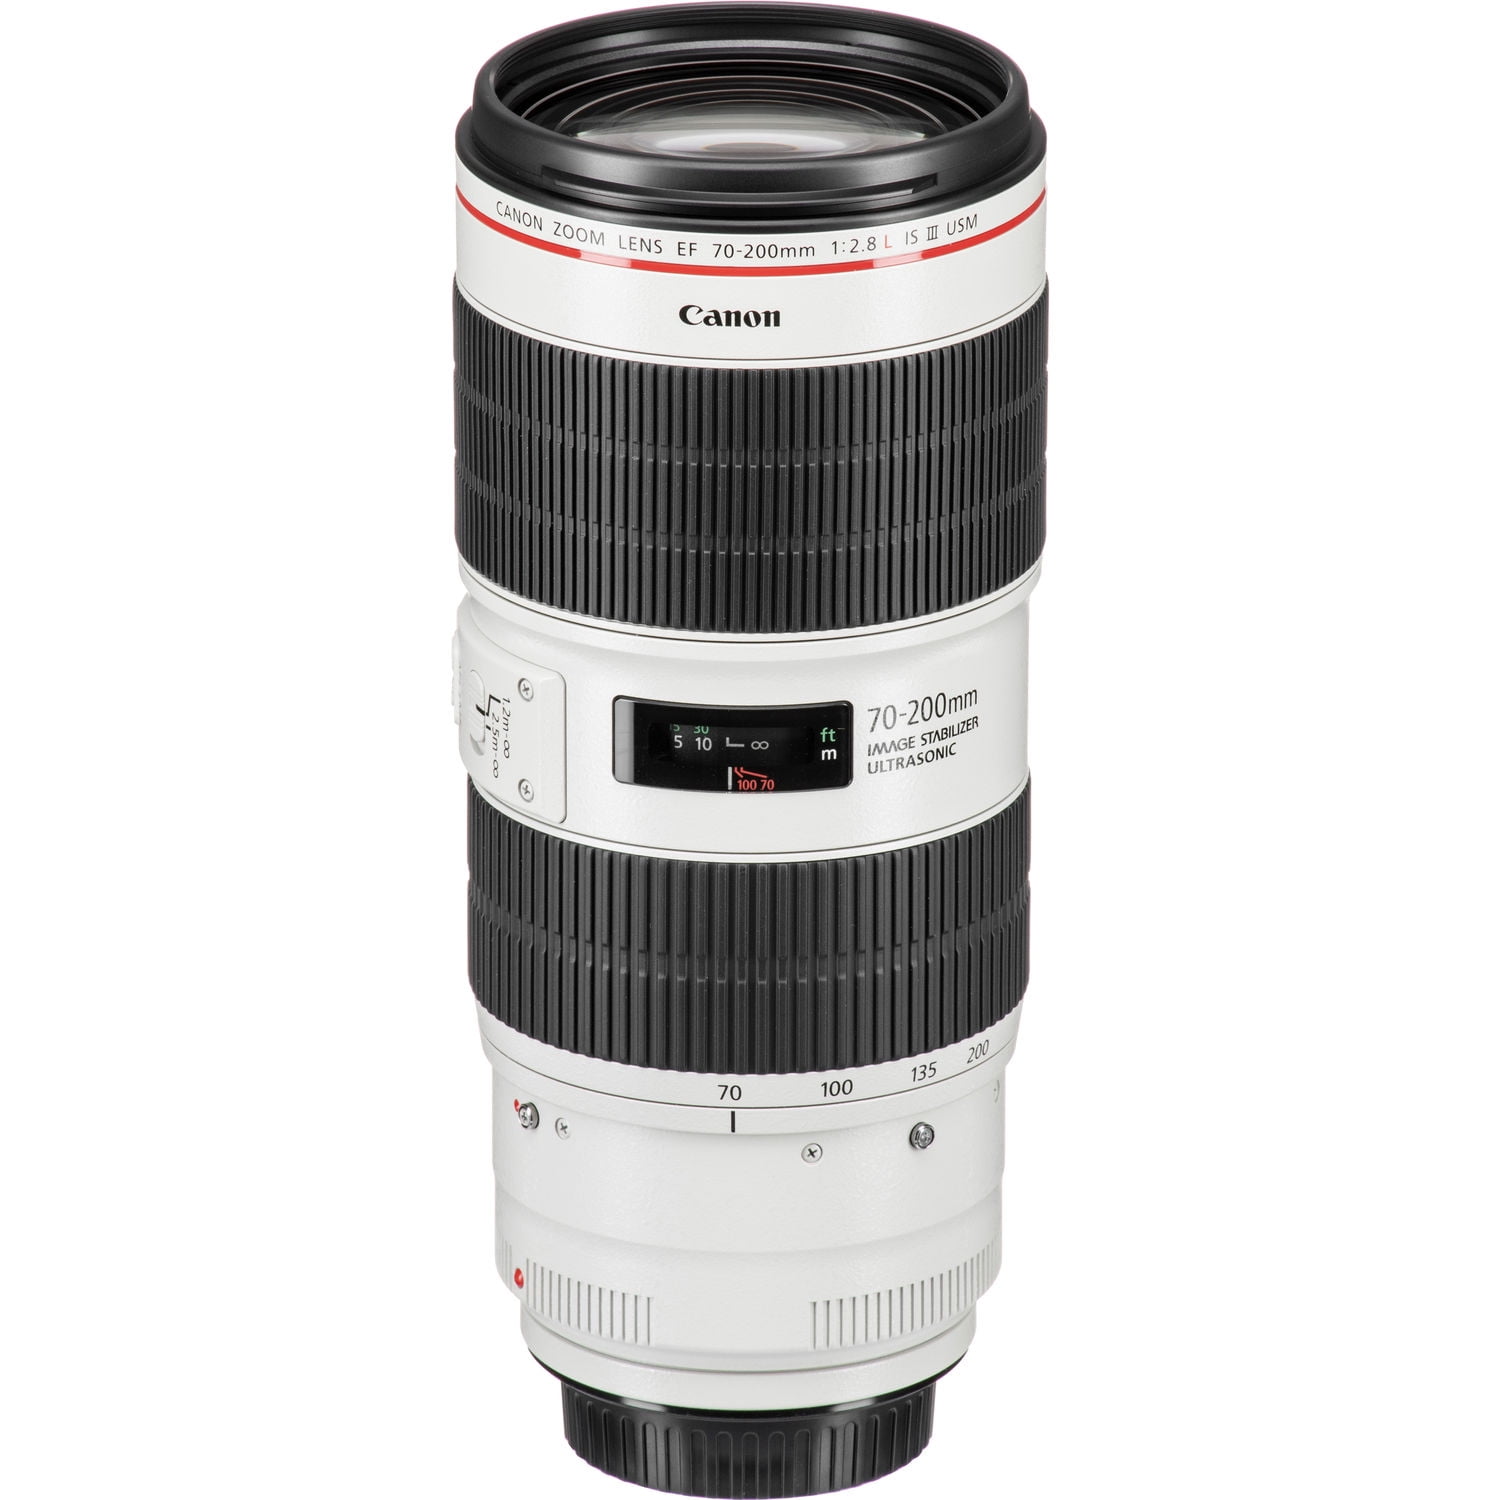 Canon EF 70-200mm f/2.8L IS III USM Lens - Walmart.com